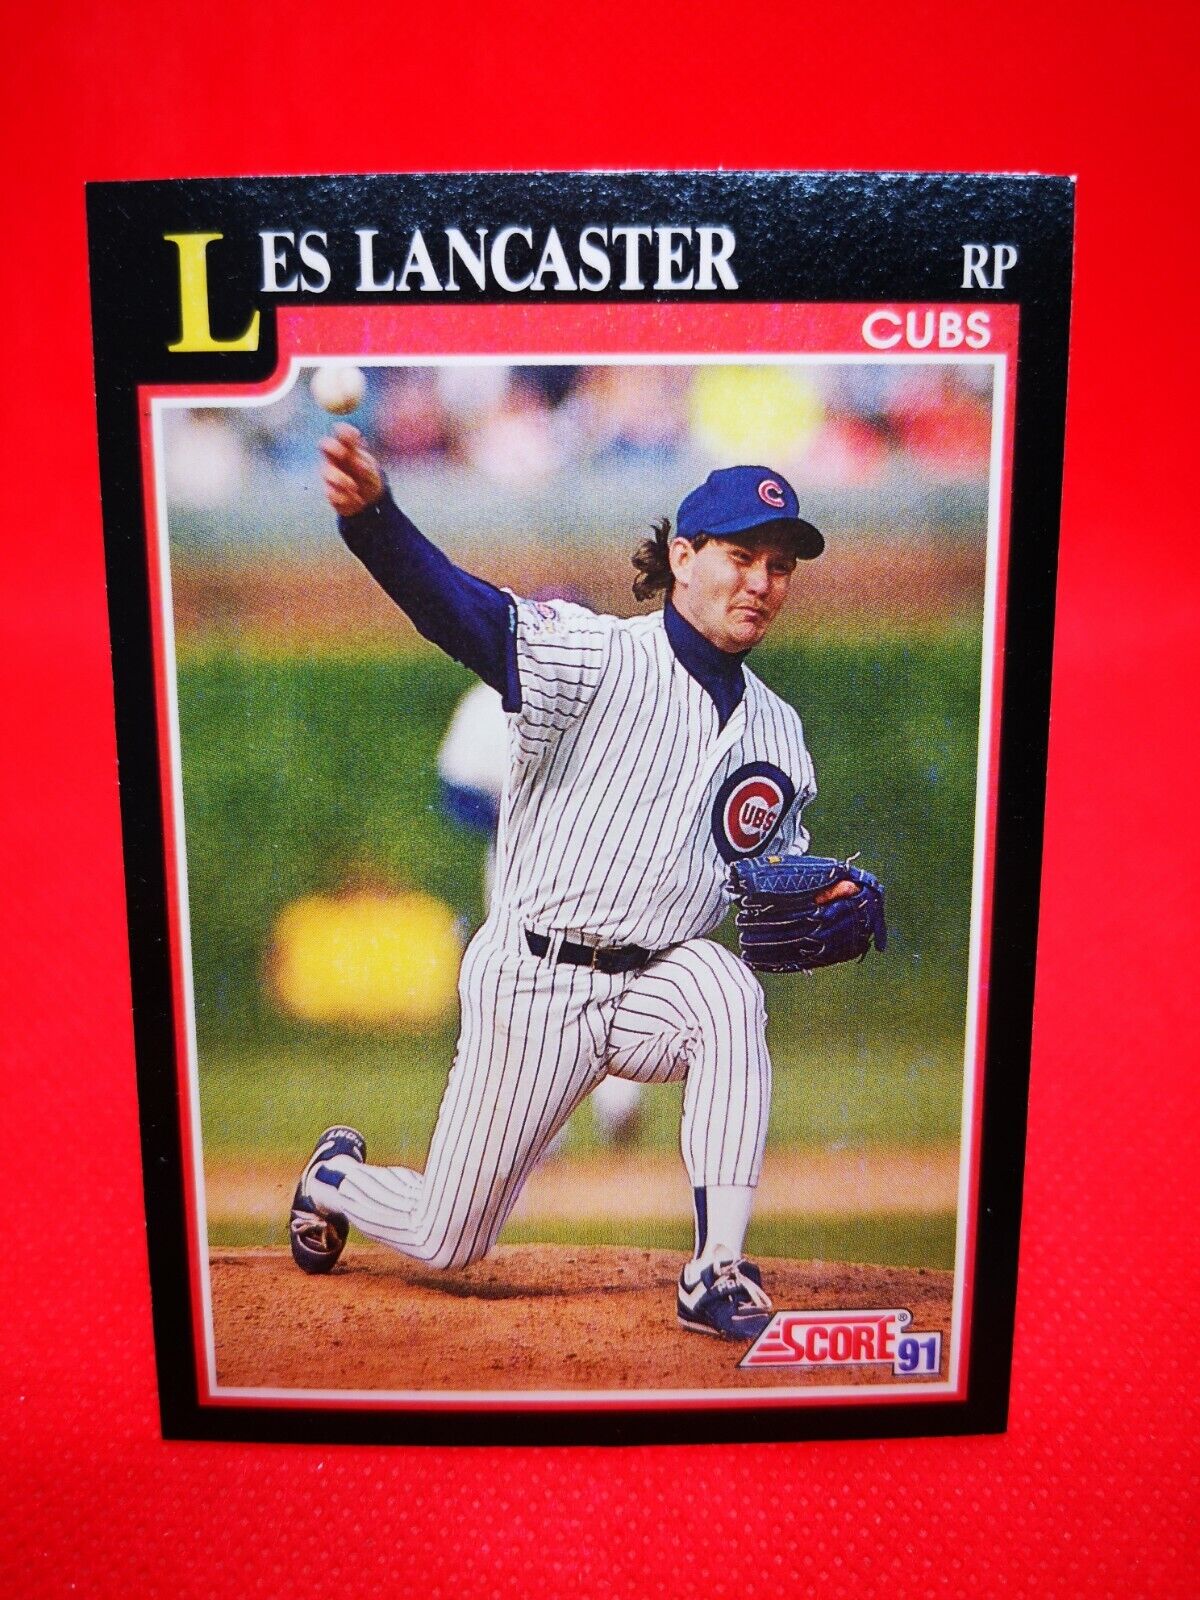 1991 MLB US NM+/M Chicago Cubs Baseball Card Score #293 Les Lancaste